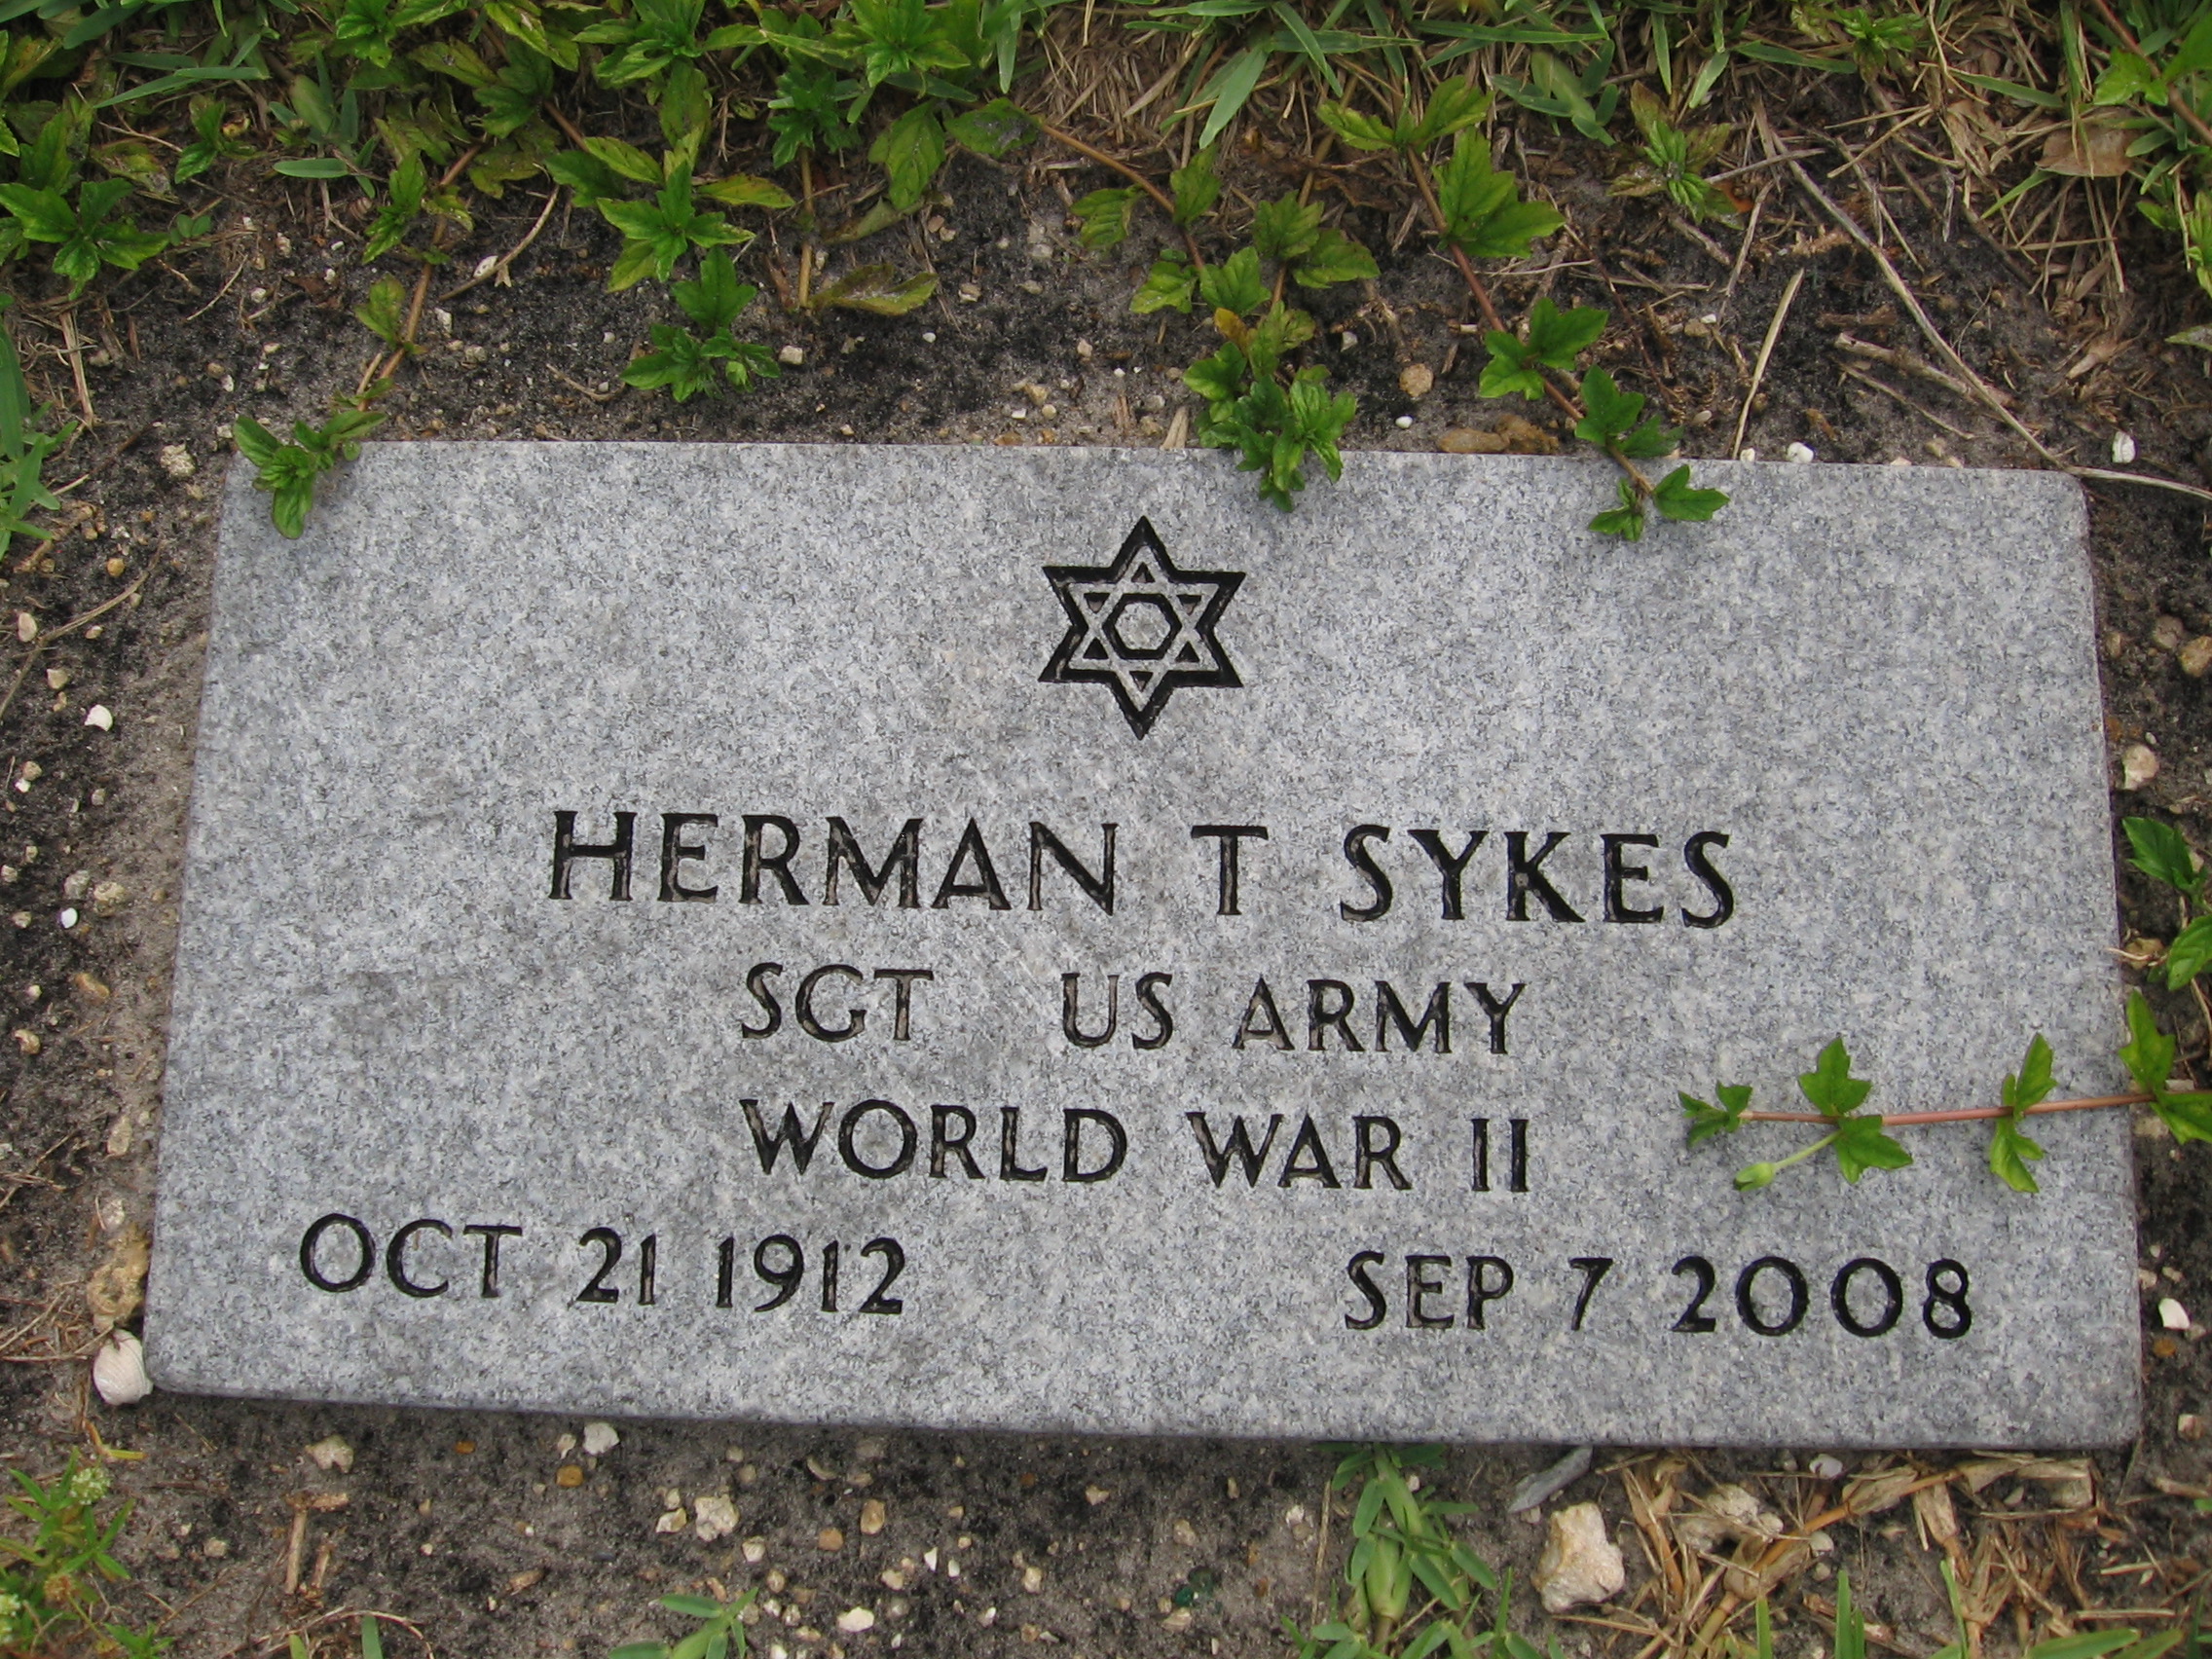 Sgt Herman T Sykes